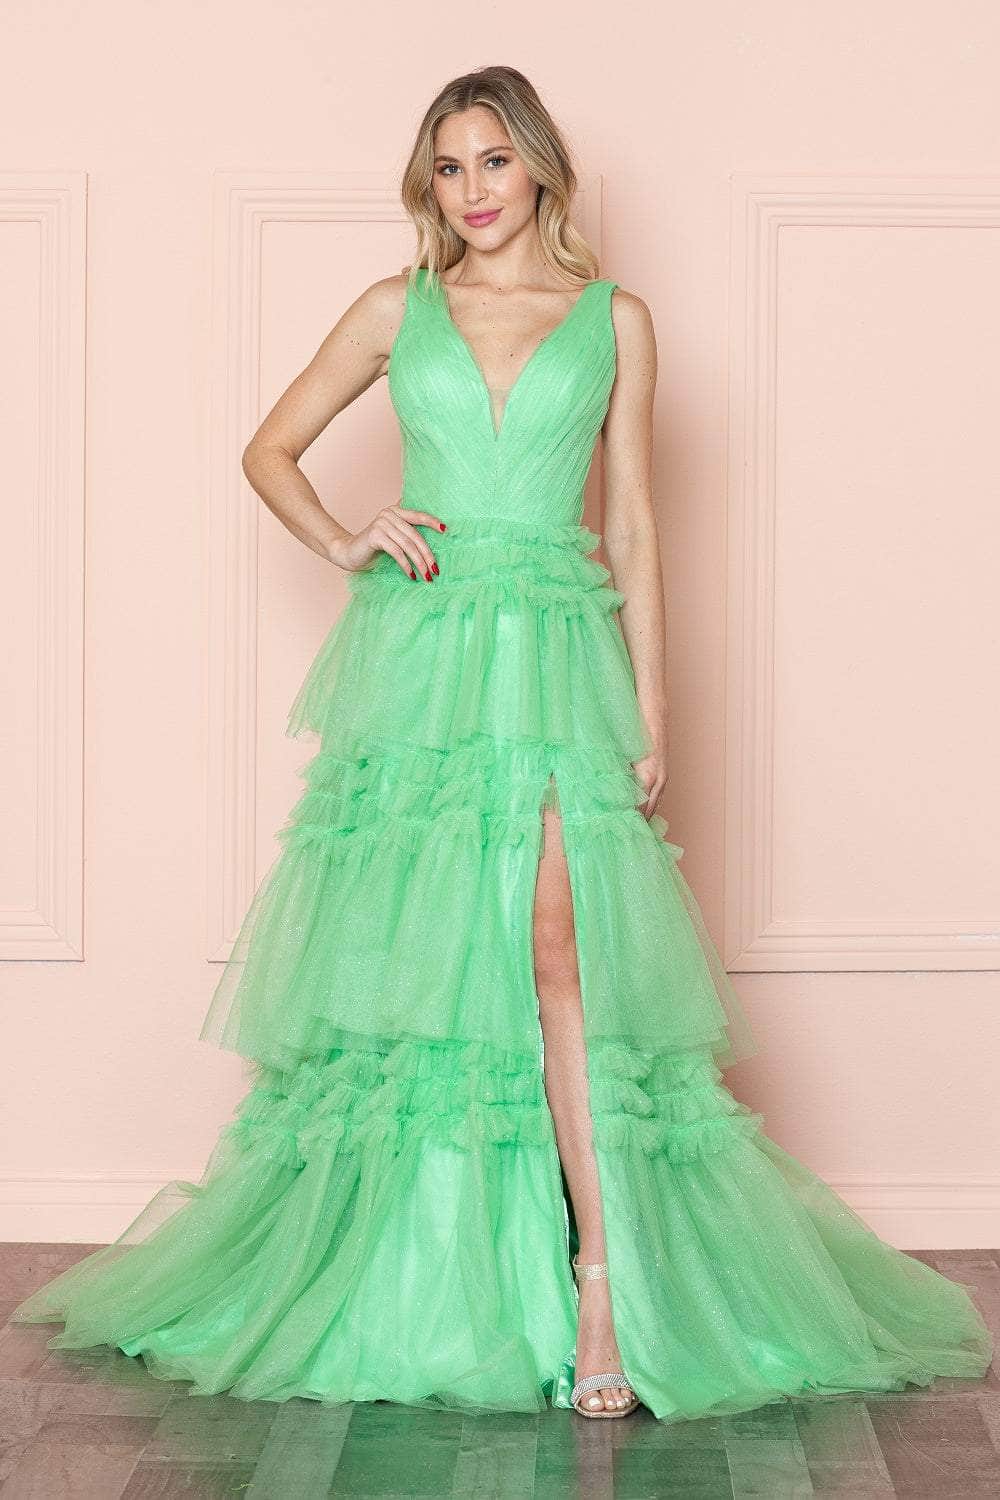 Poly USA 9406 - Glitter Sleeveless Tiered Prom Dress
